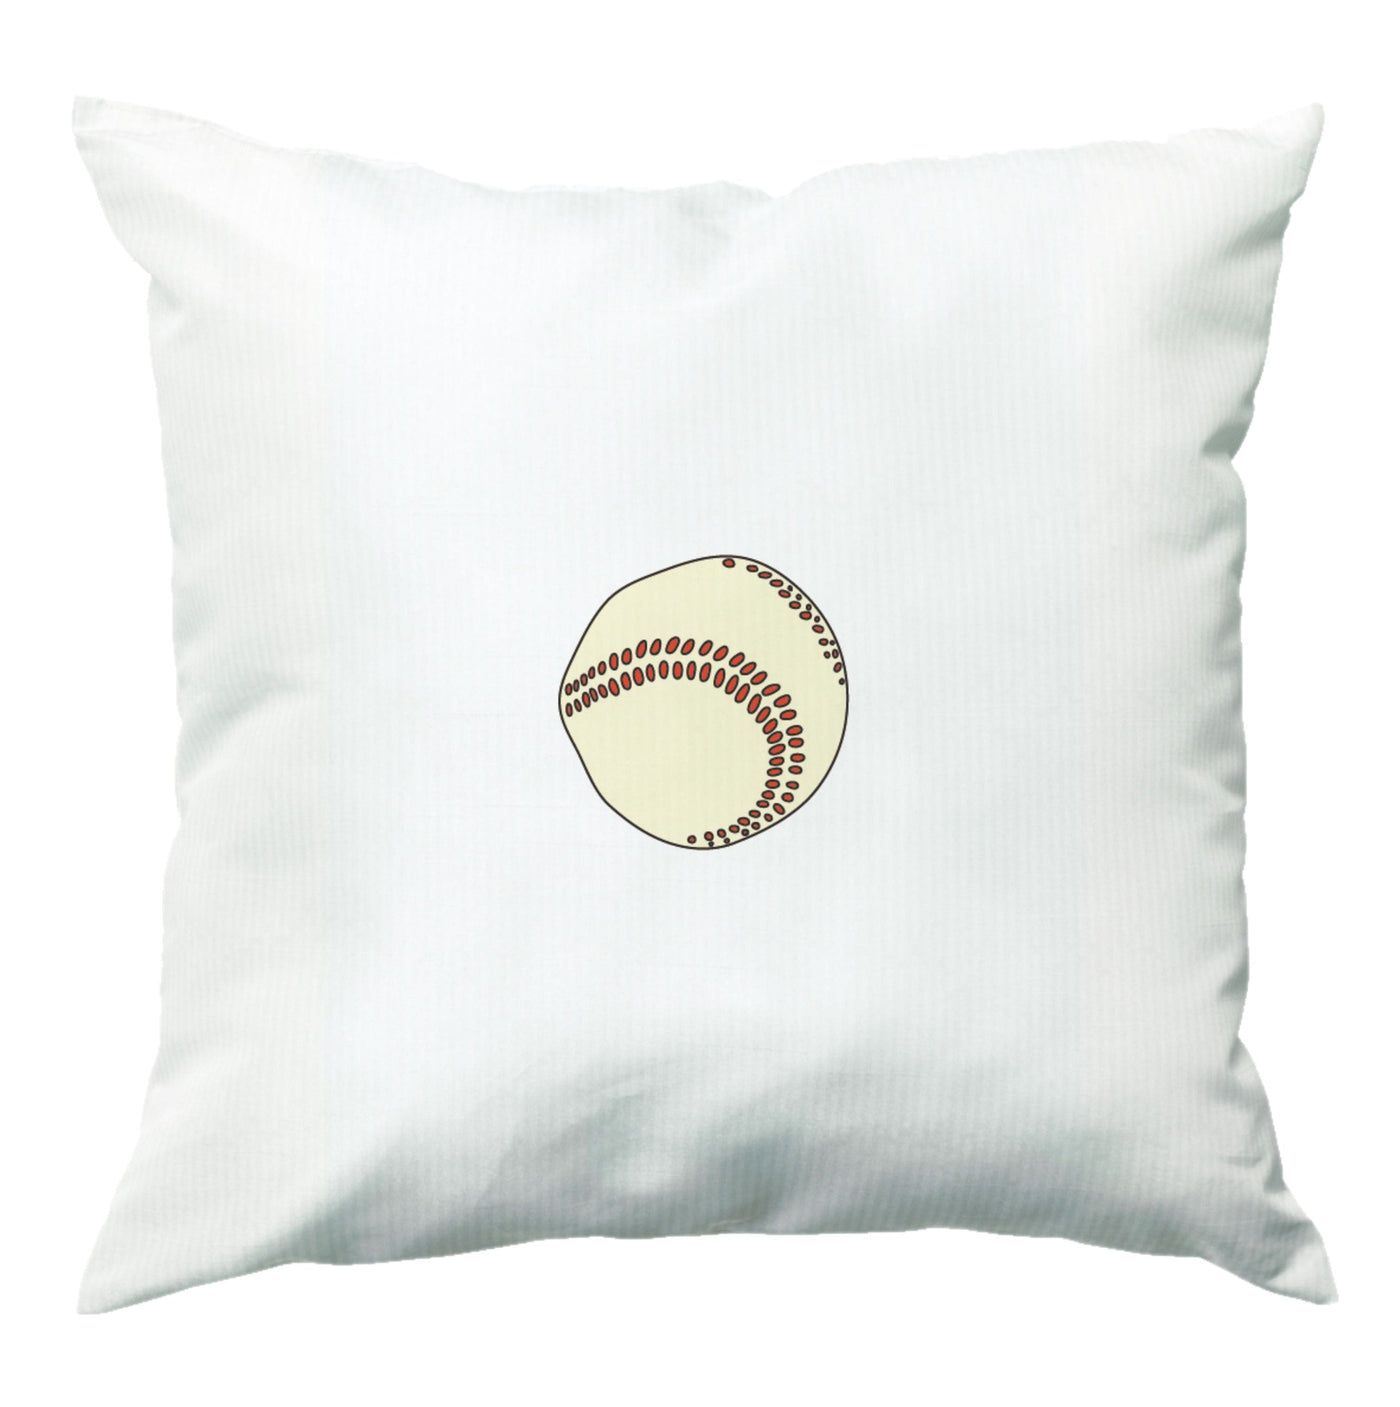 Iconic Ball - Baseball Cushion